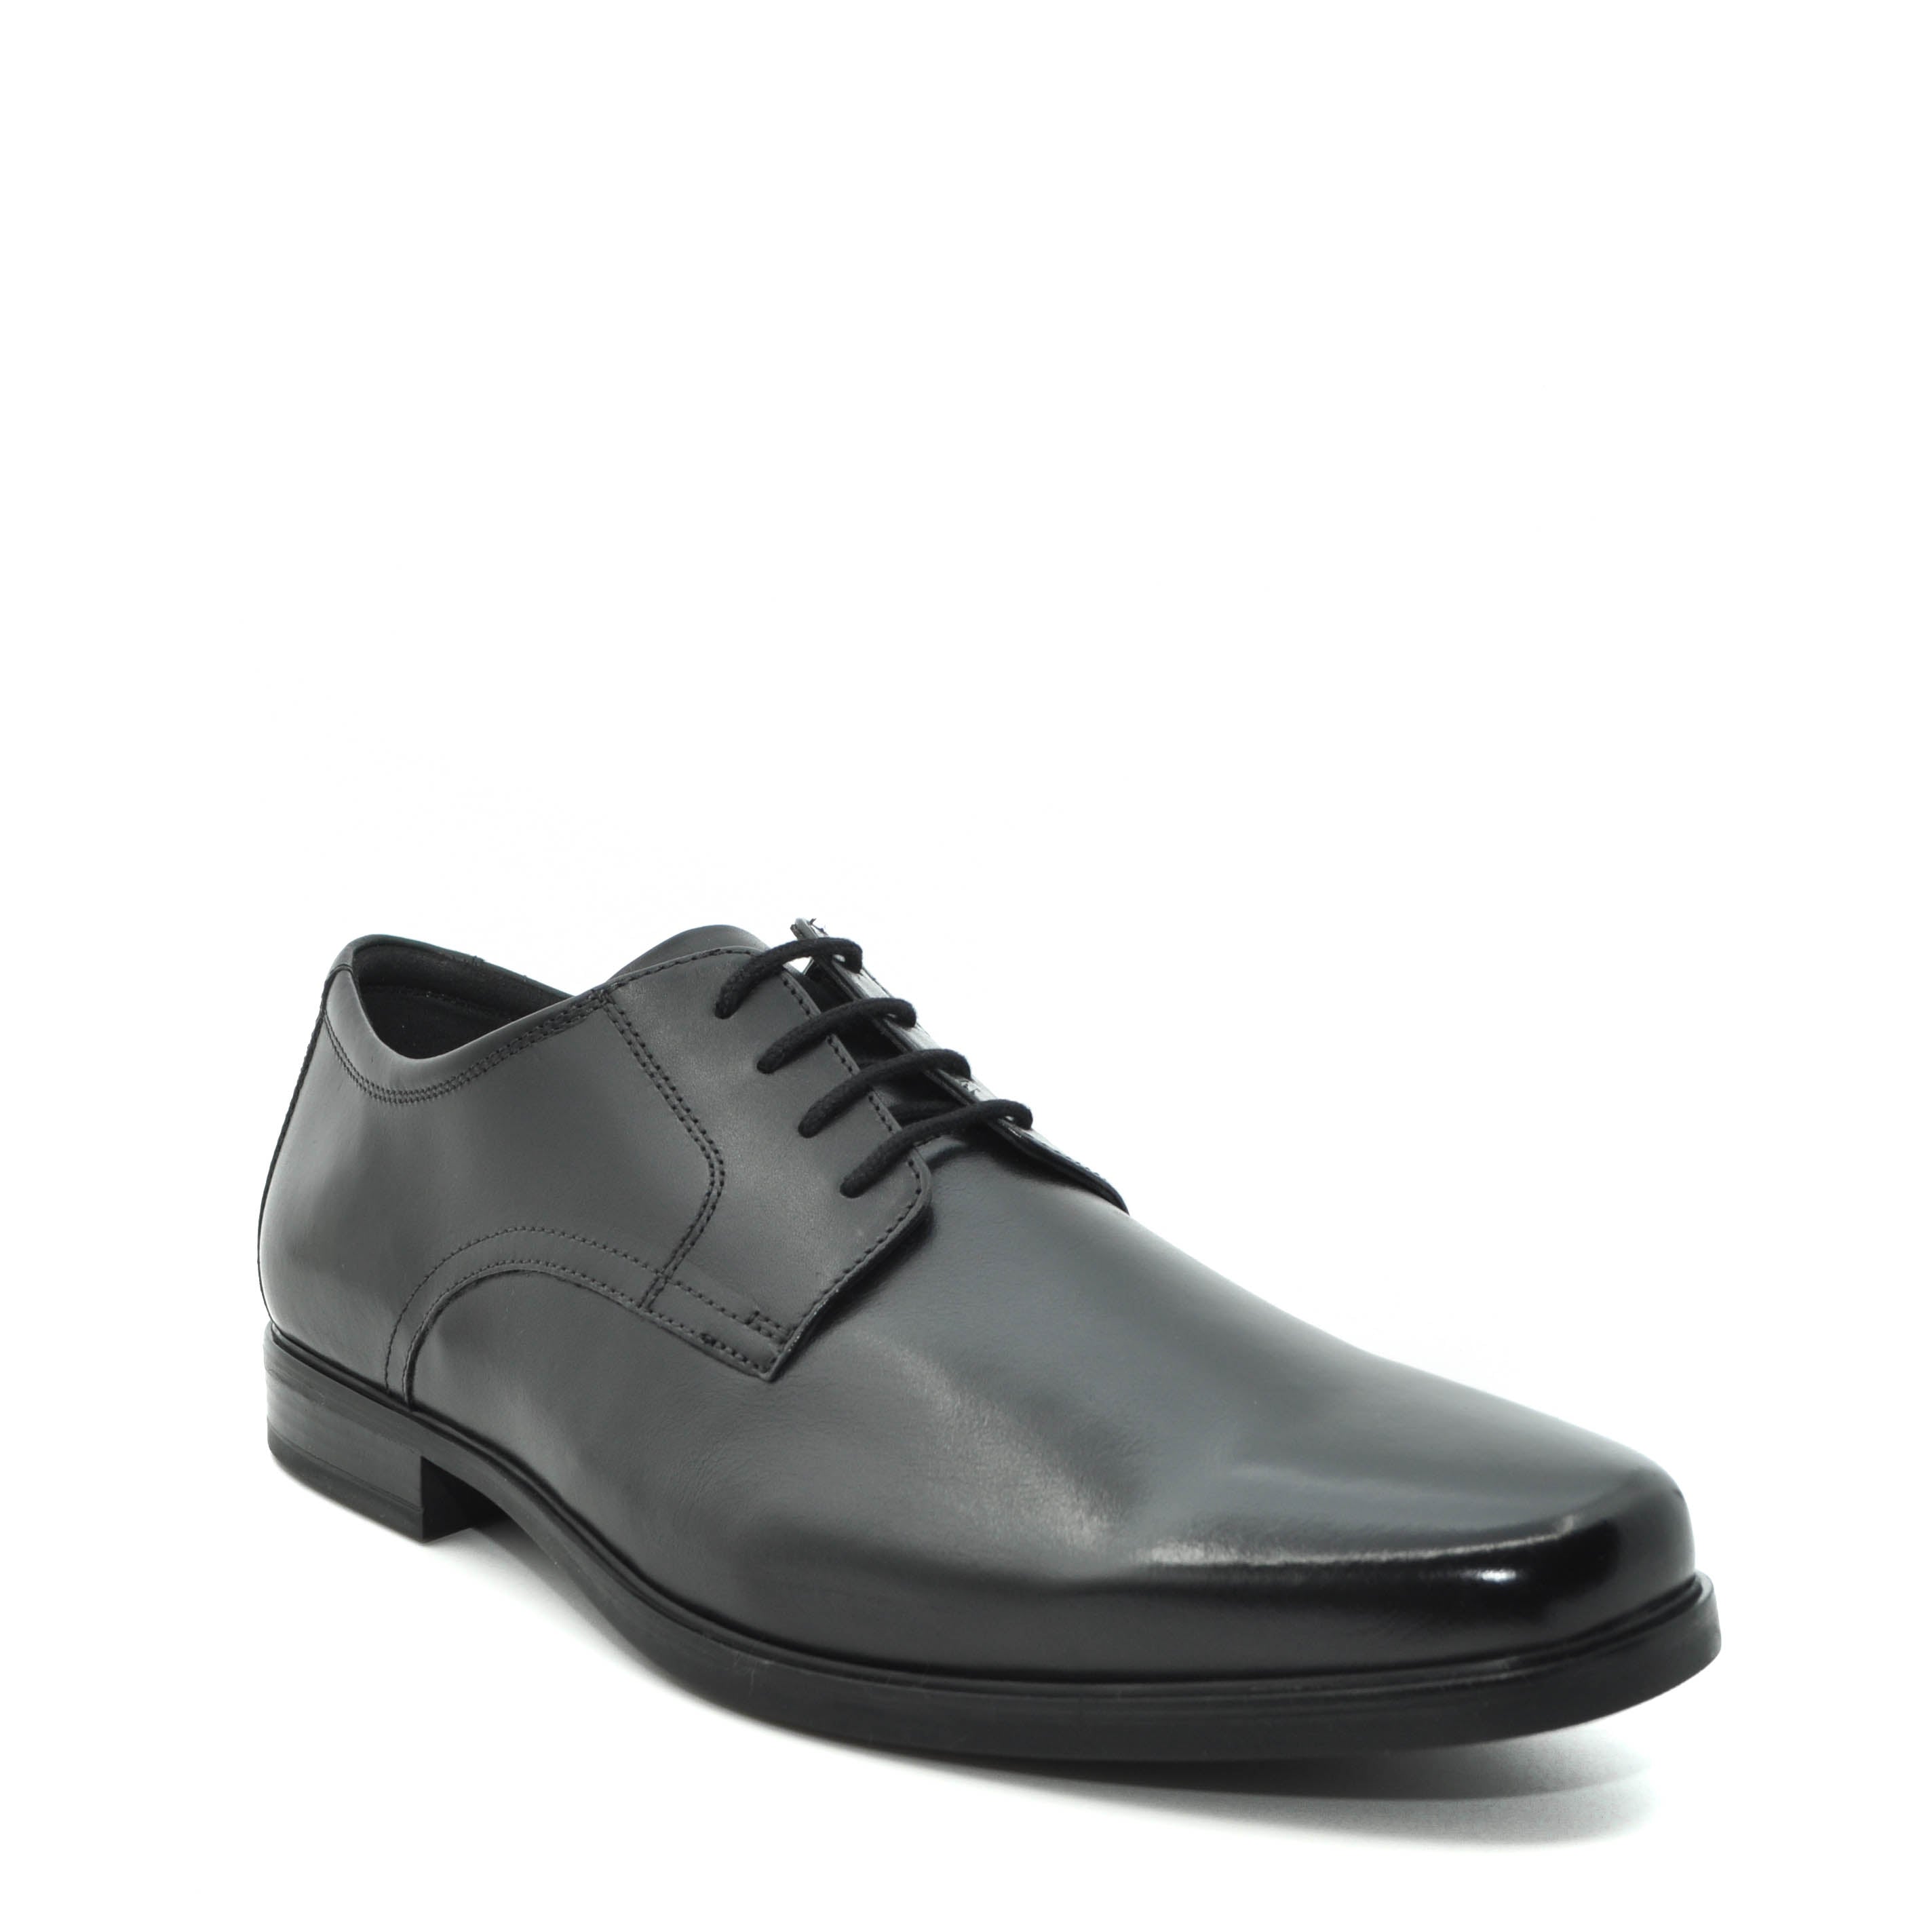 CLARKS men shoes online ireland | dress for